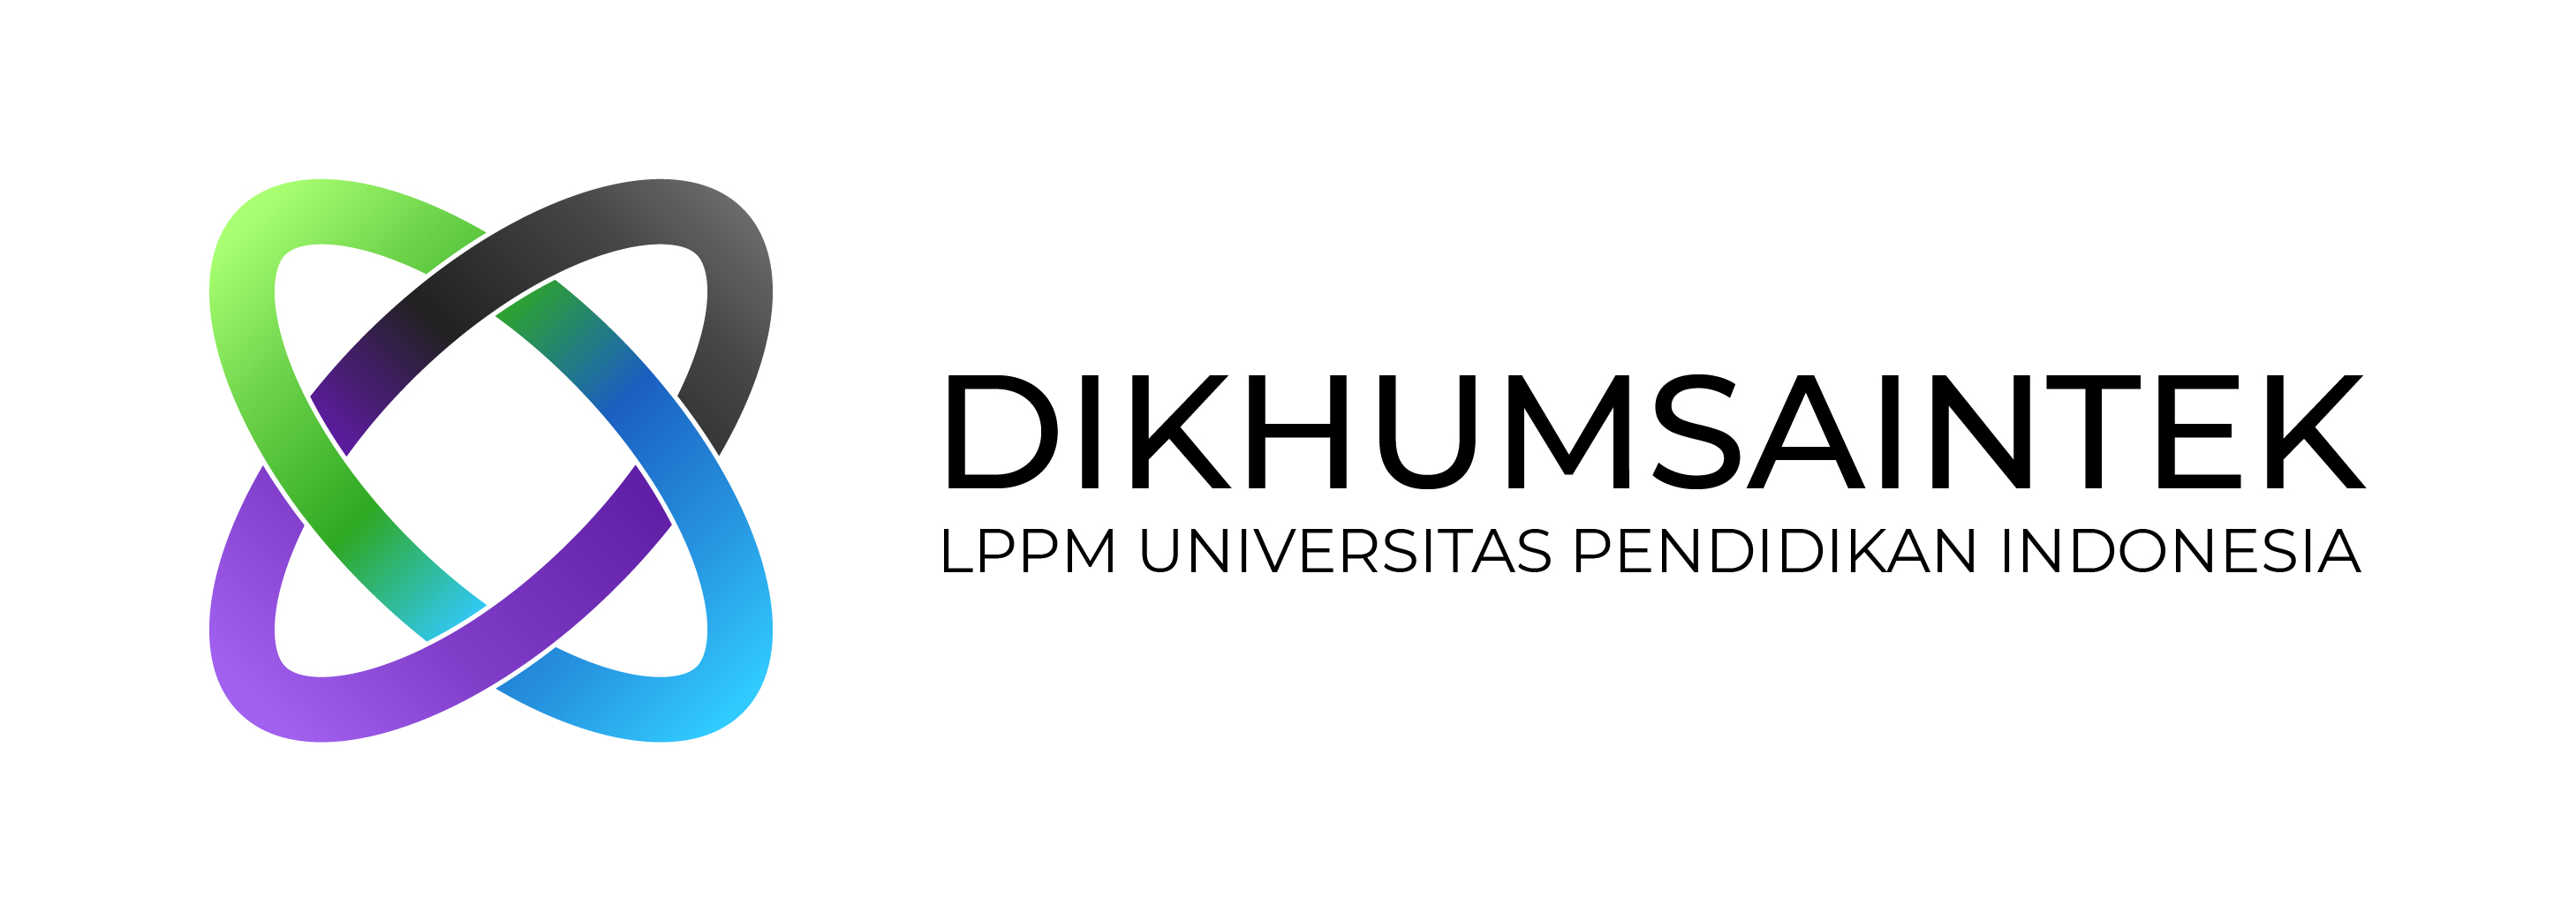 Dikhumsaintek_Extended_Version_Logo-03.jpg